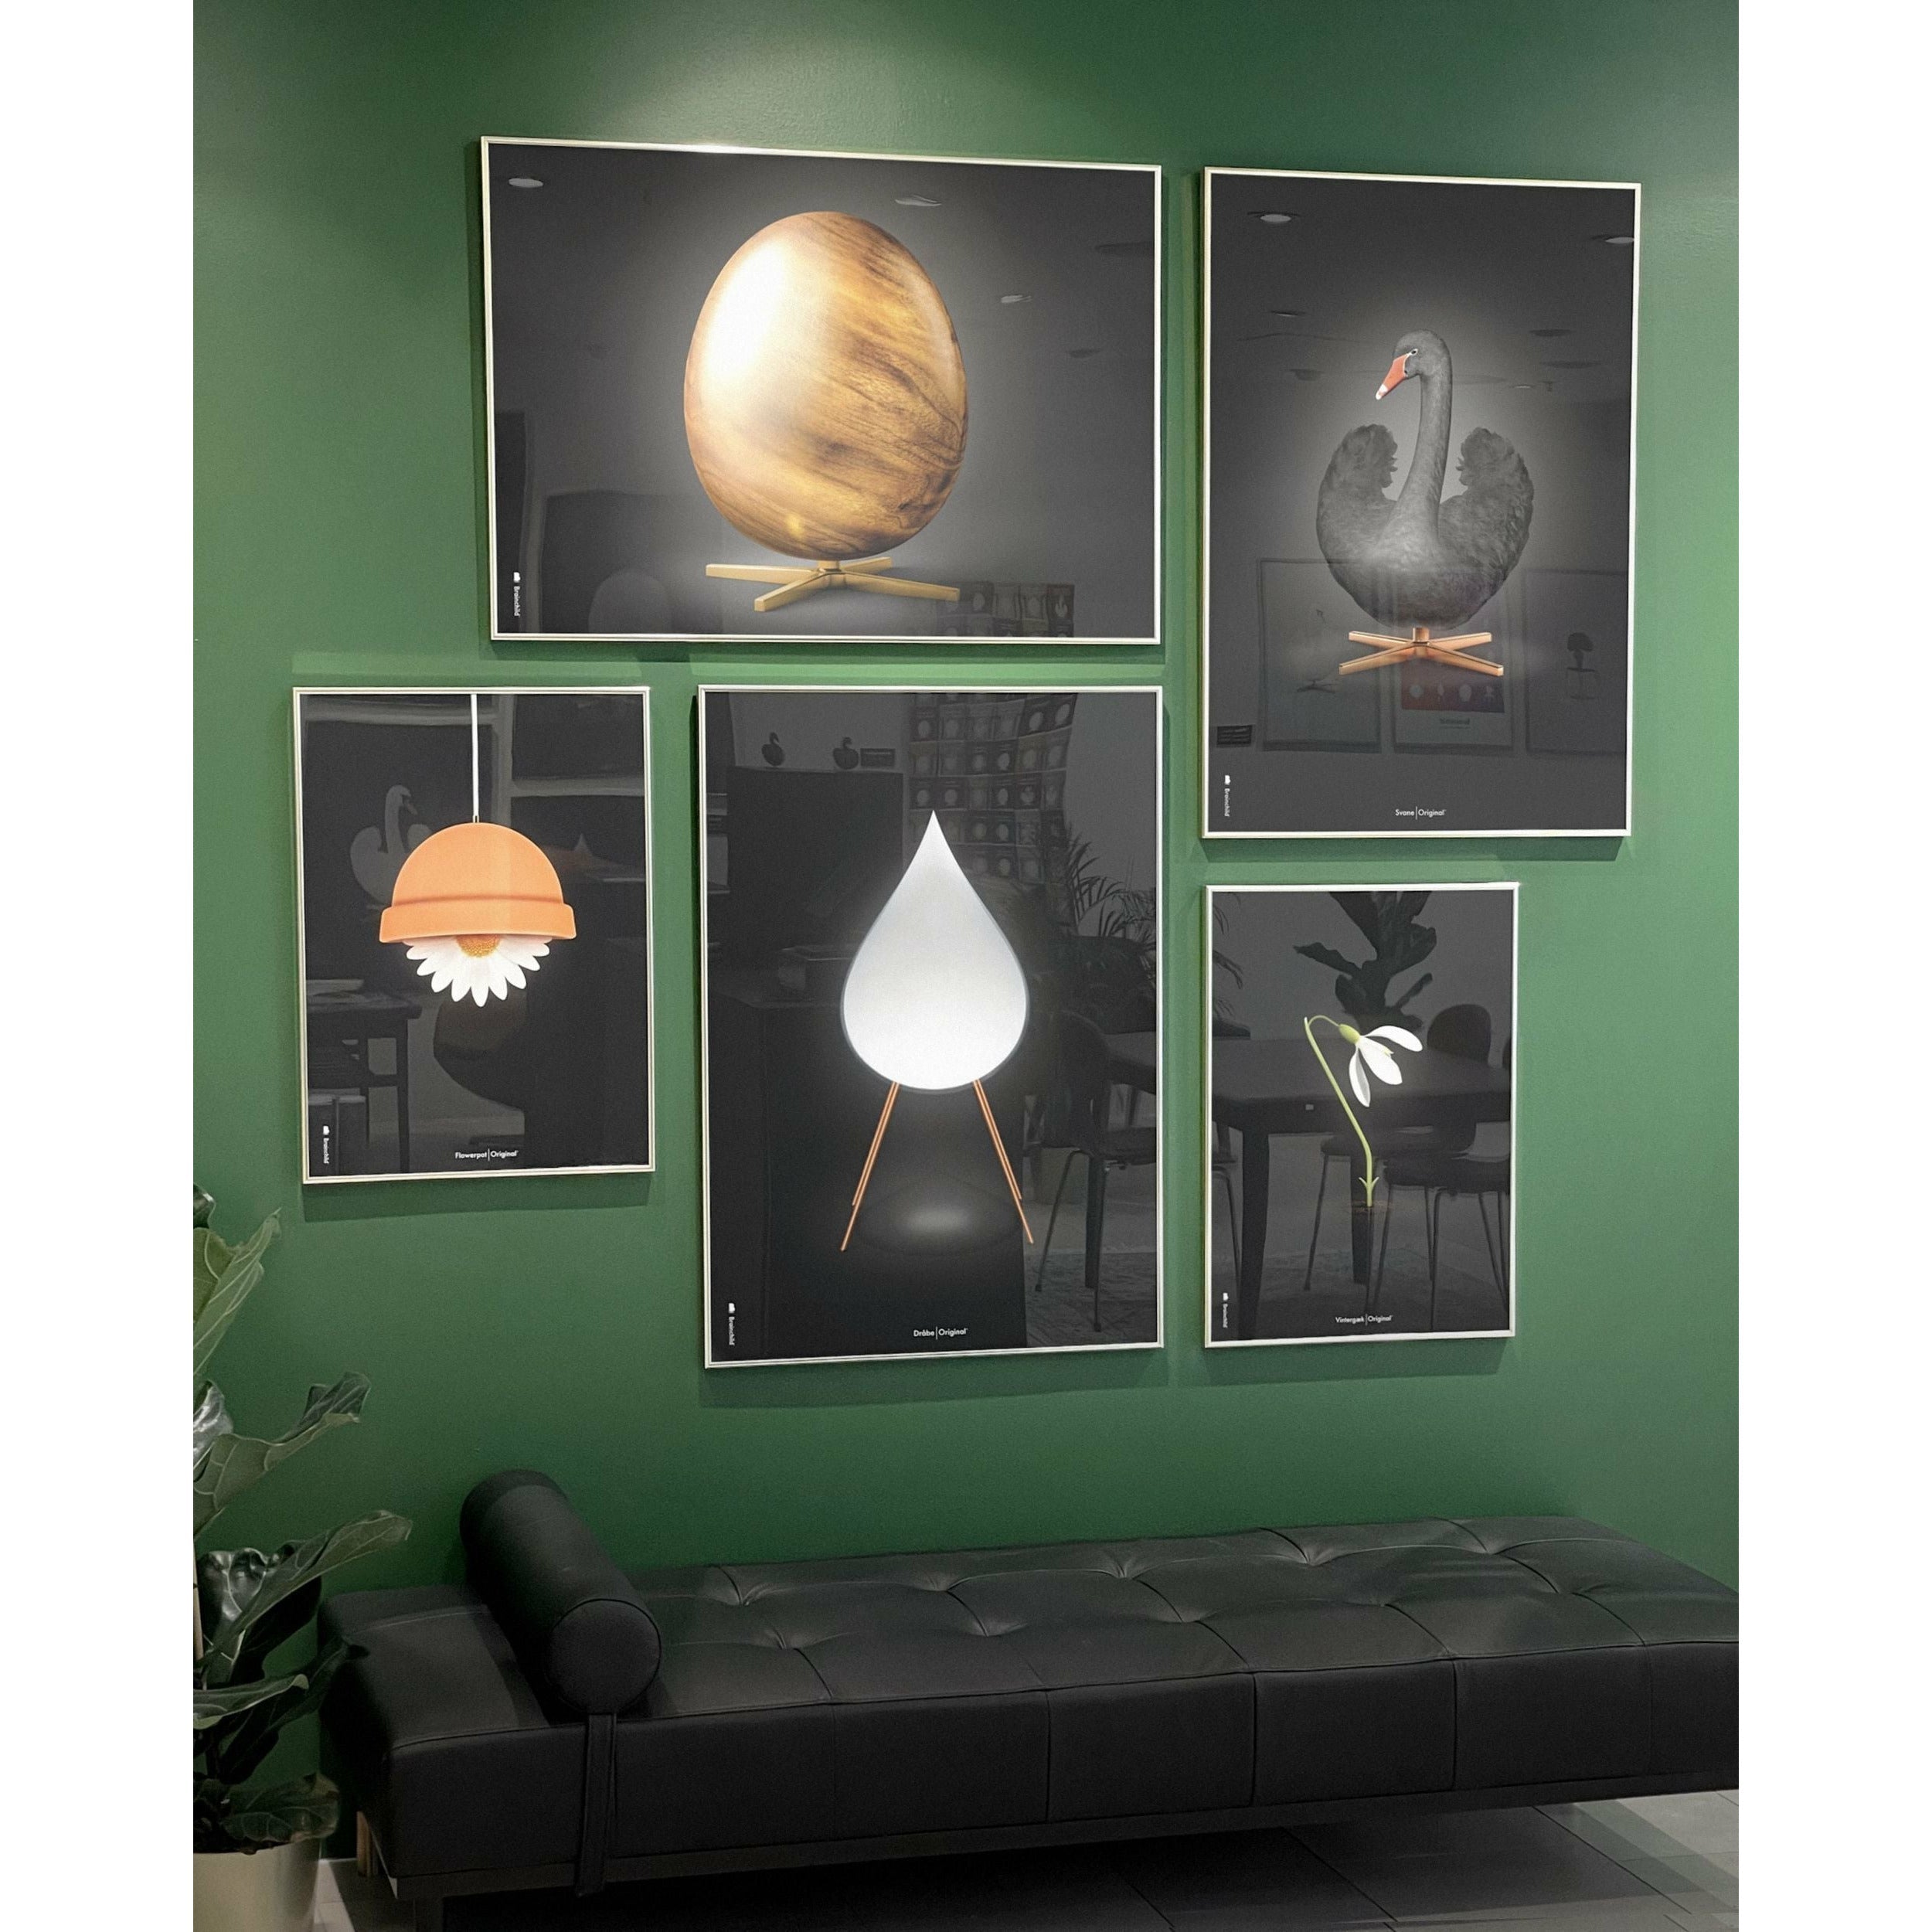 Brainchild Egg Cross Format Poster, Frame In Black Lacquered Wood A5, Black